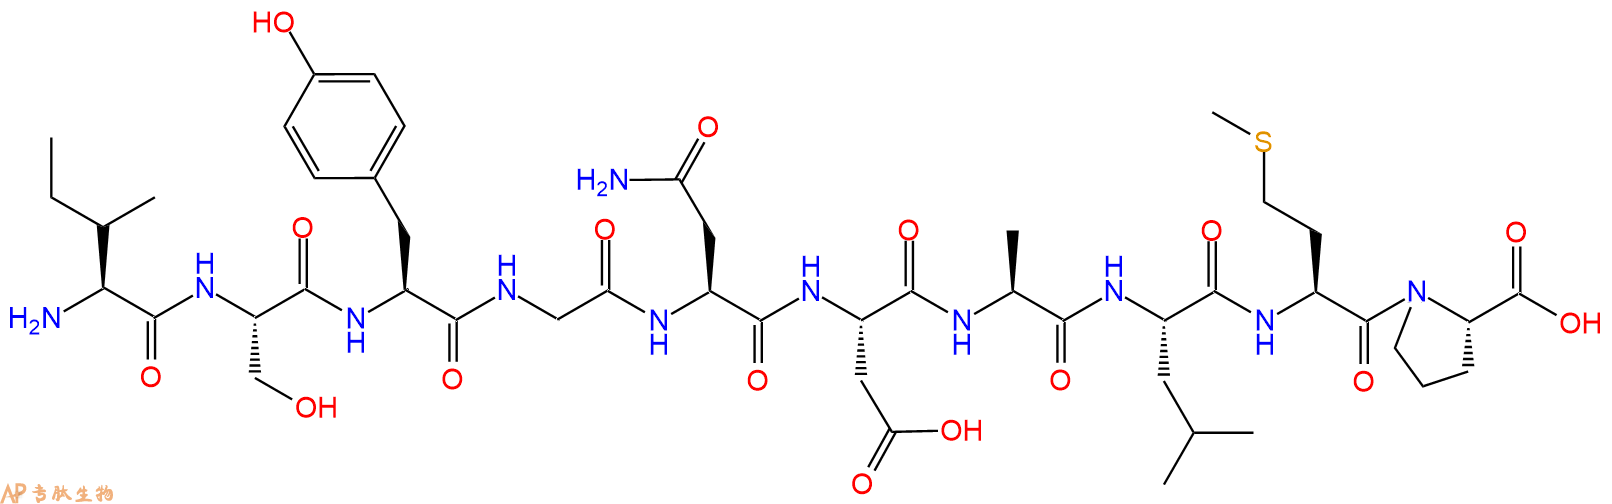 专肽生物产品Amyloid β/A4 Protein Precursor770 (586-595) (human, mouse, rat)566173-30-6